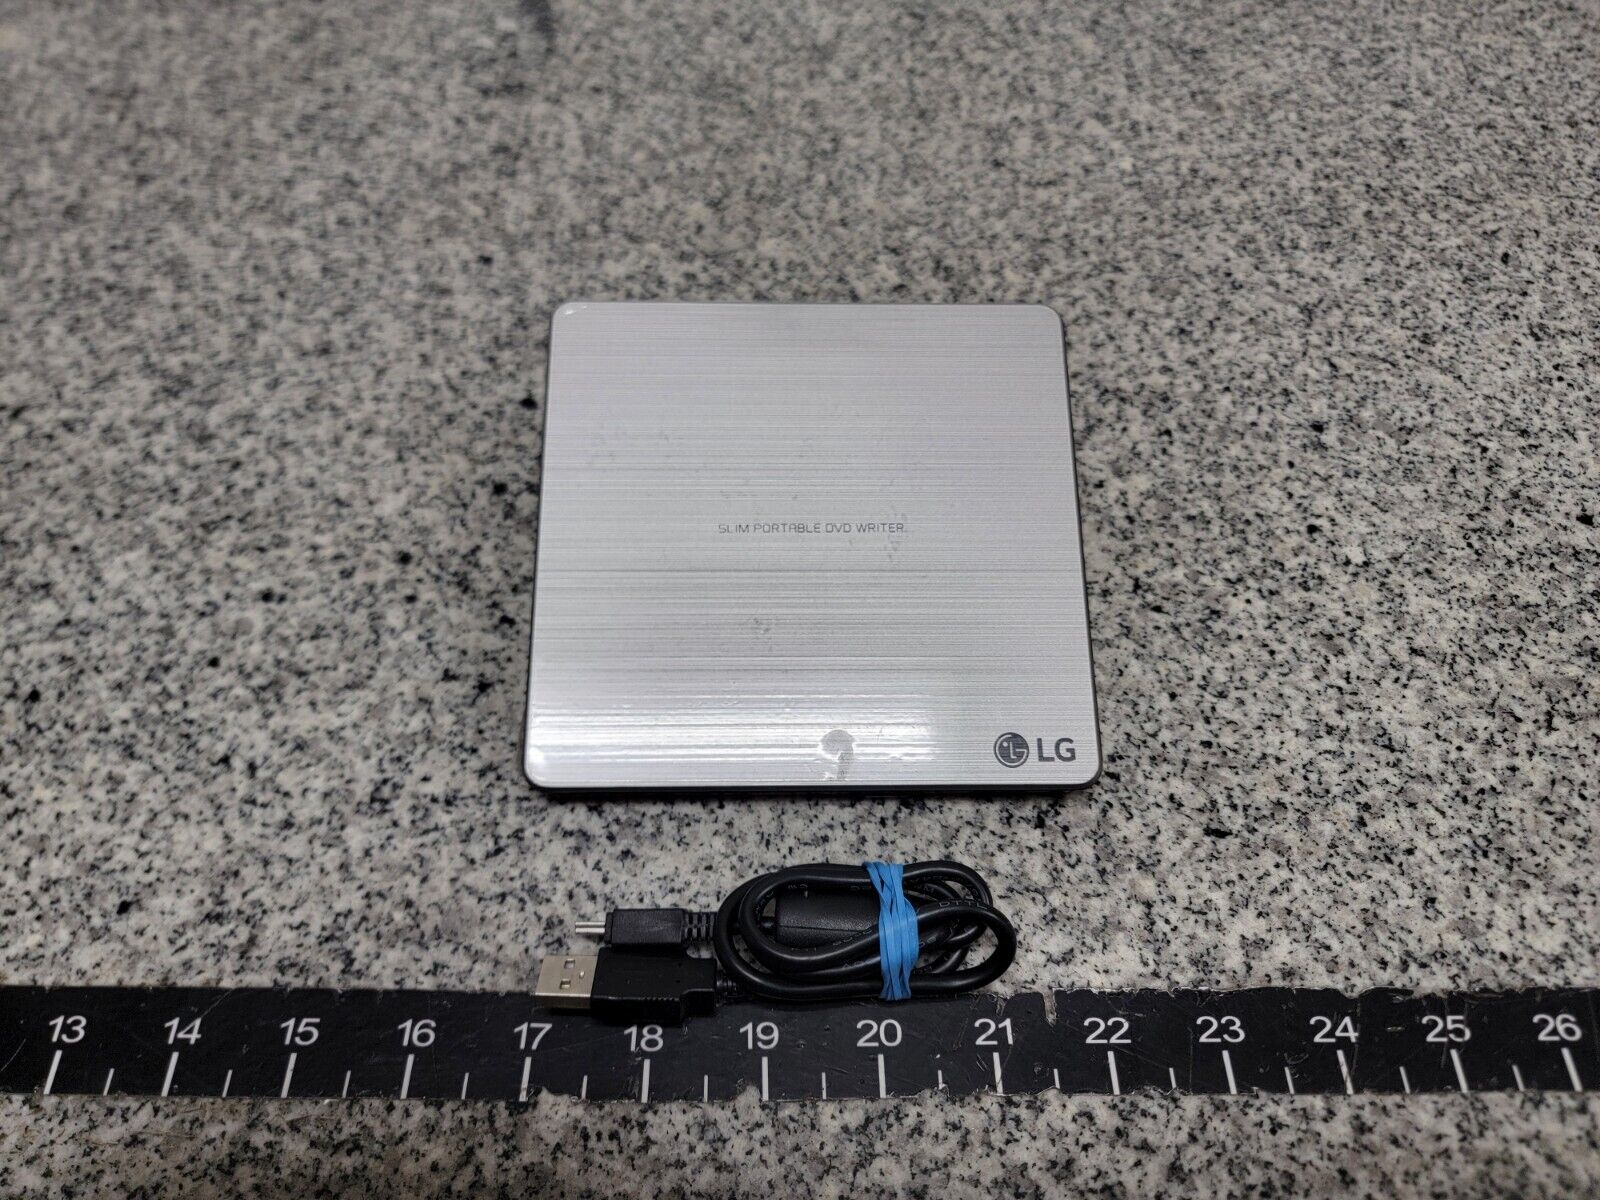 LG GP60NS50 Slim Portable DVD Writer Mac Windows Compatible a-x